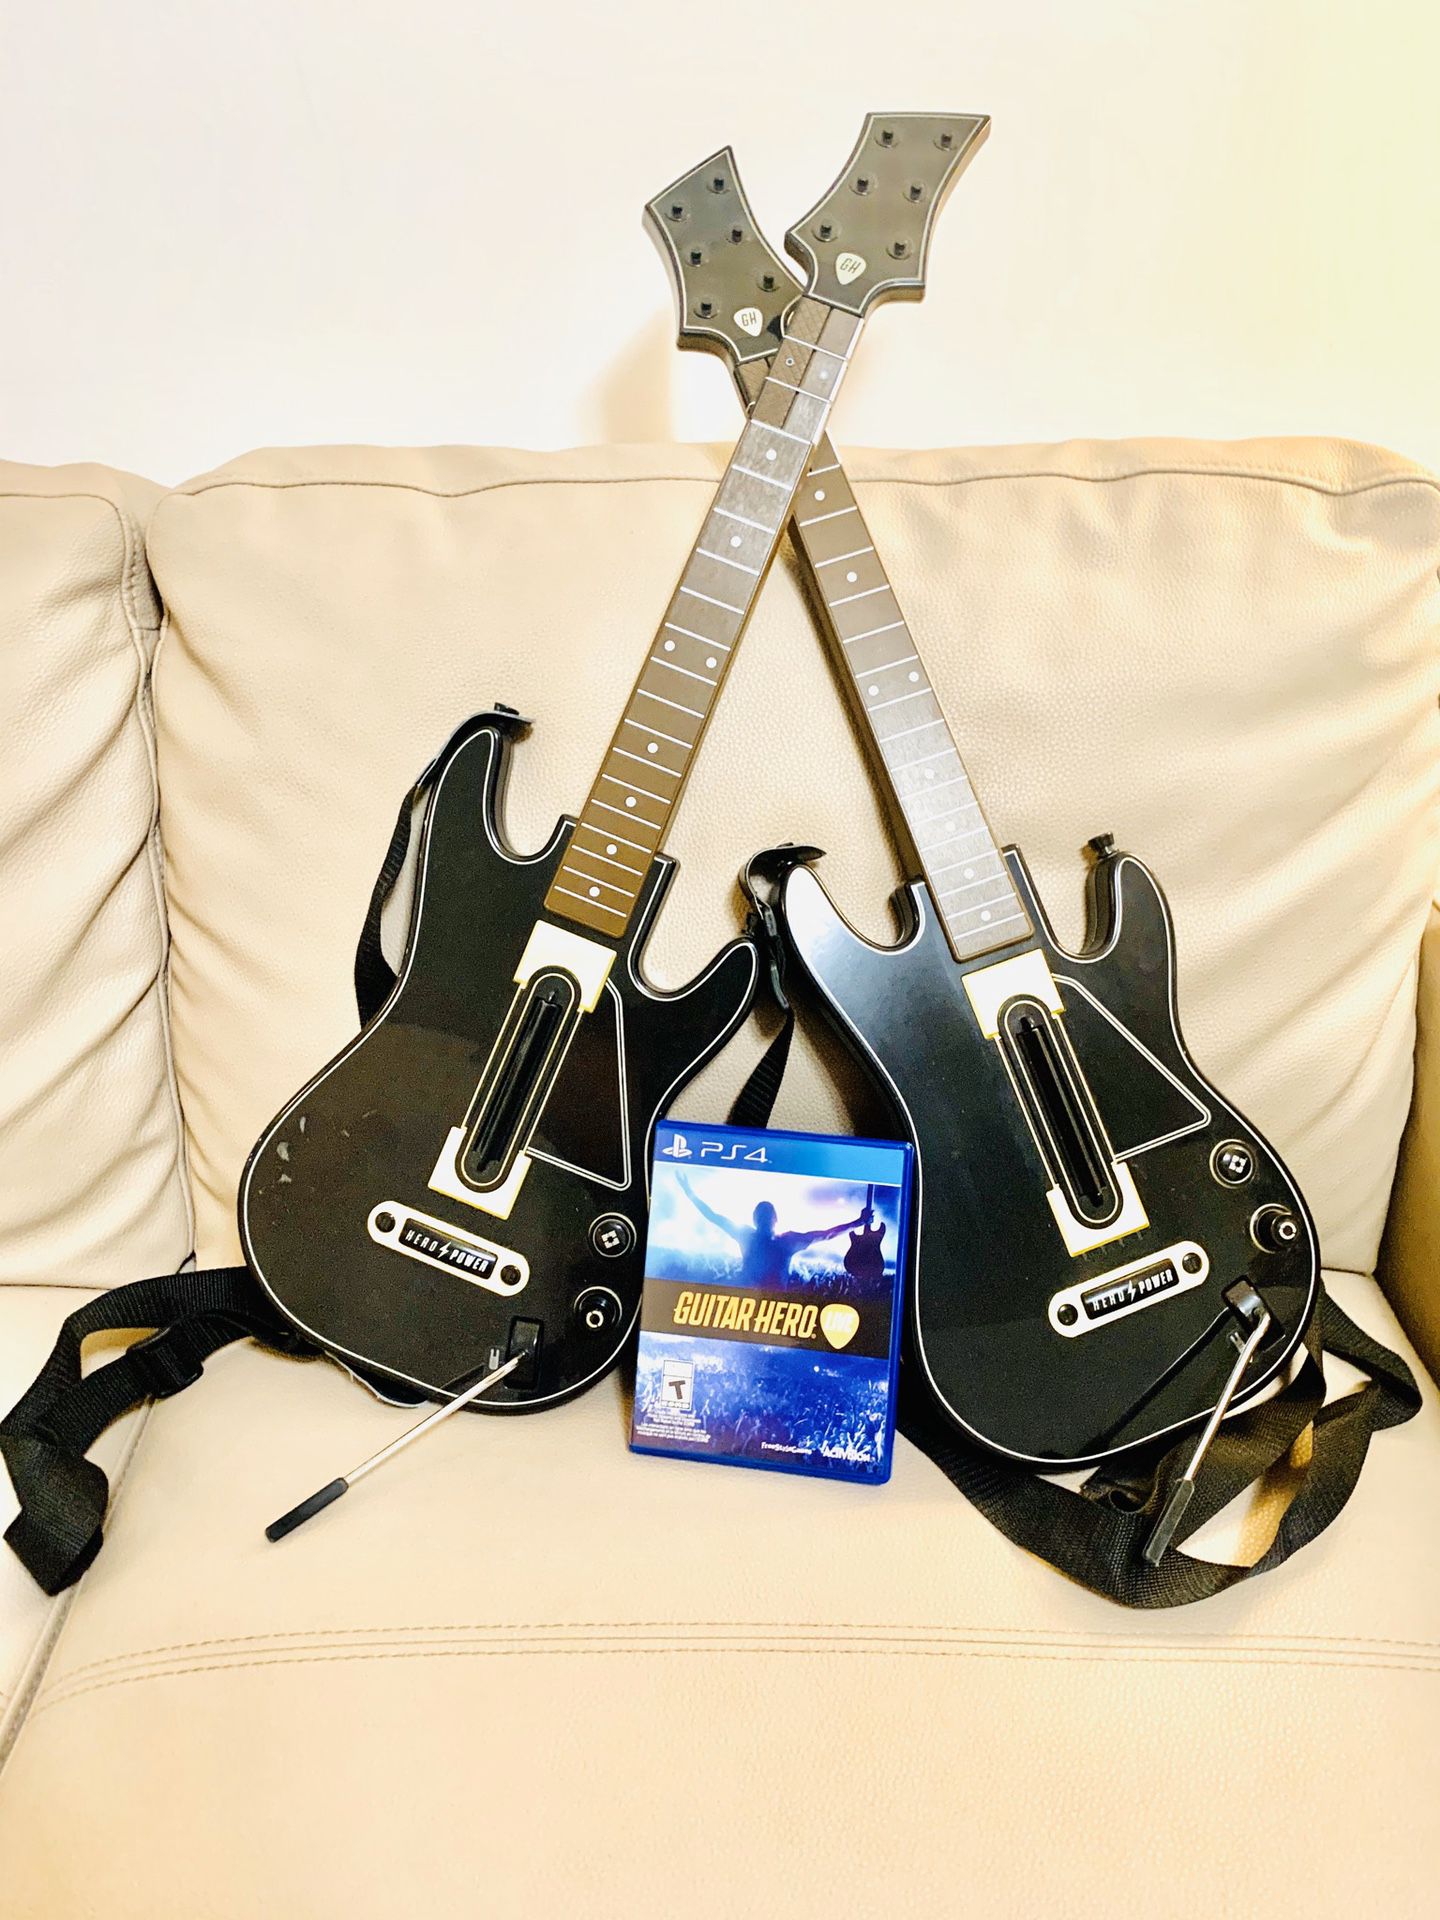 Guitar hero live bundle ( 2 guitars, game and USB connectors )